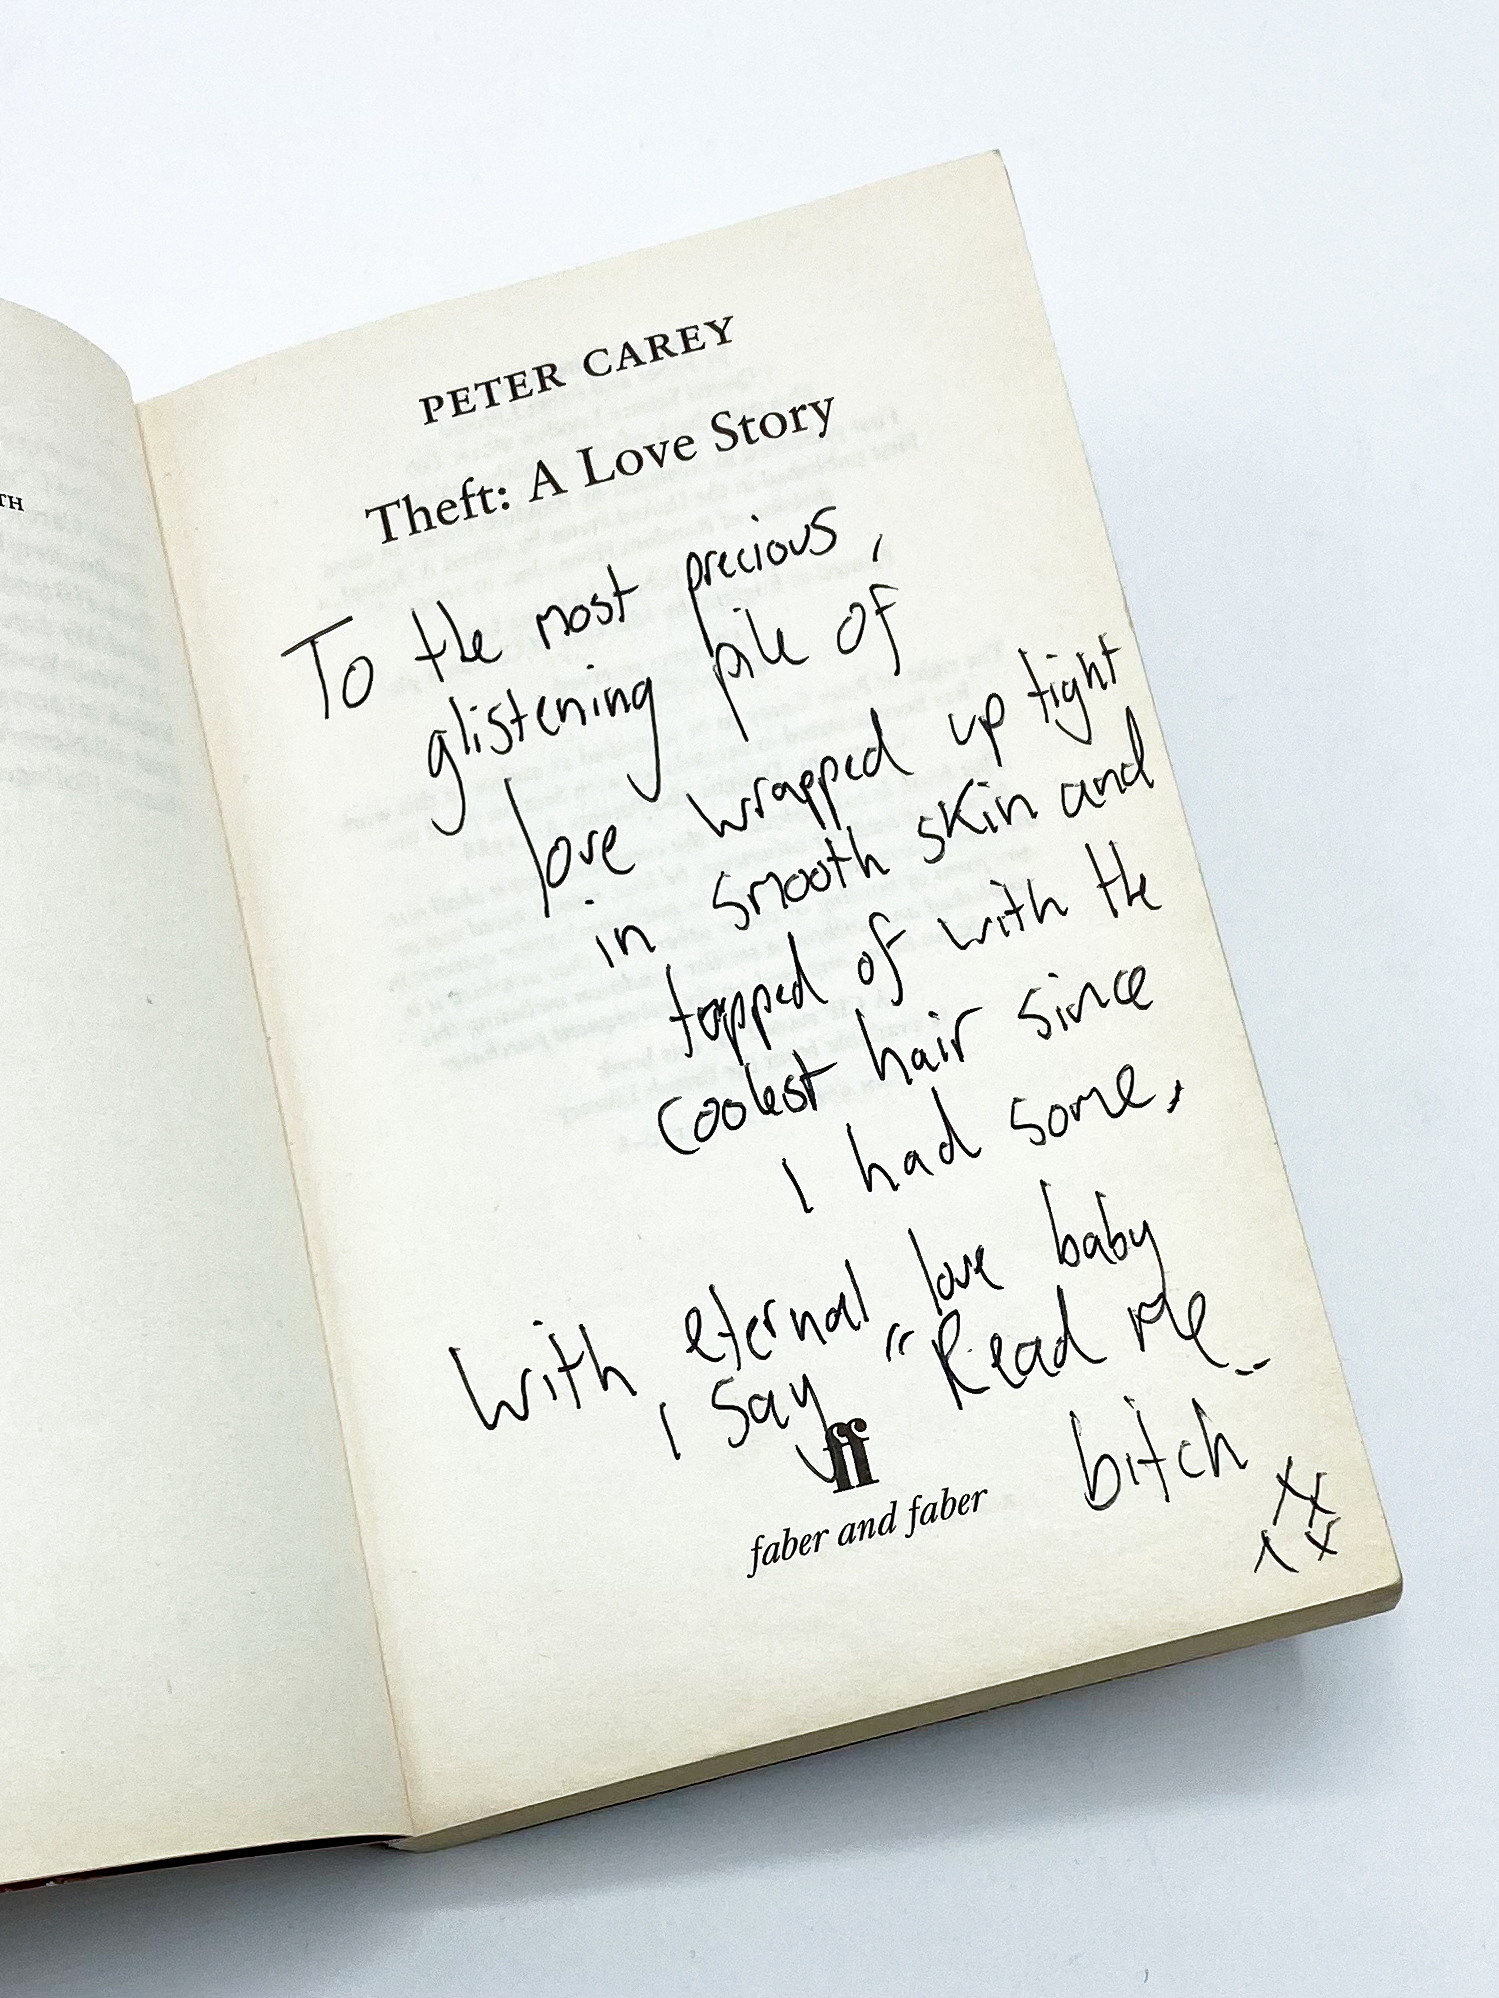 An inscription on a Peter Carey book